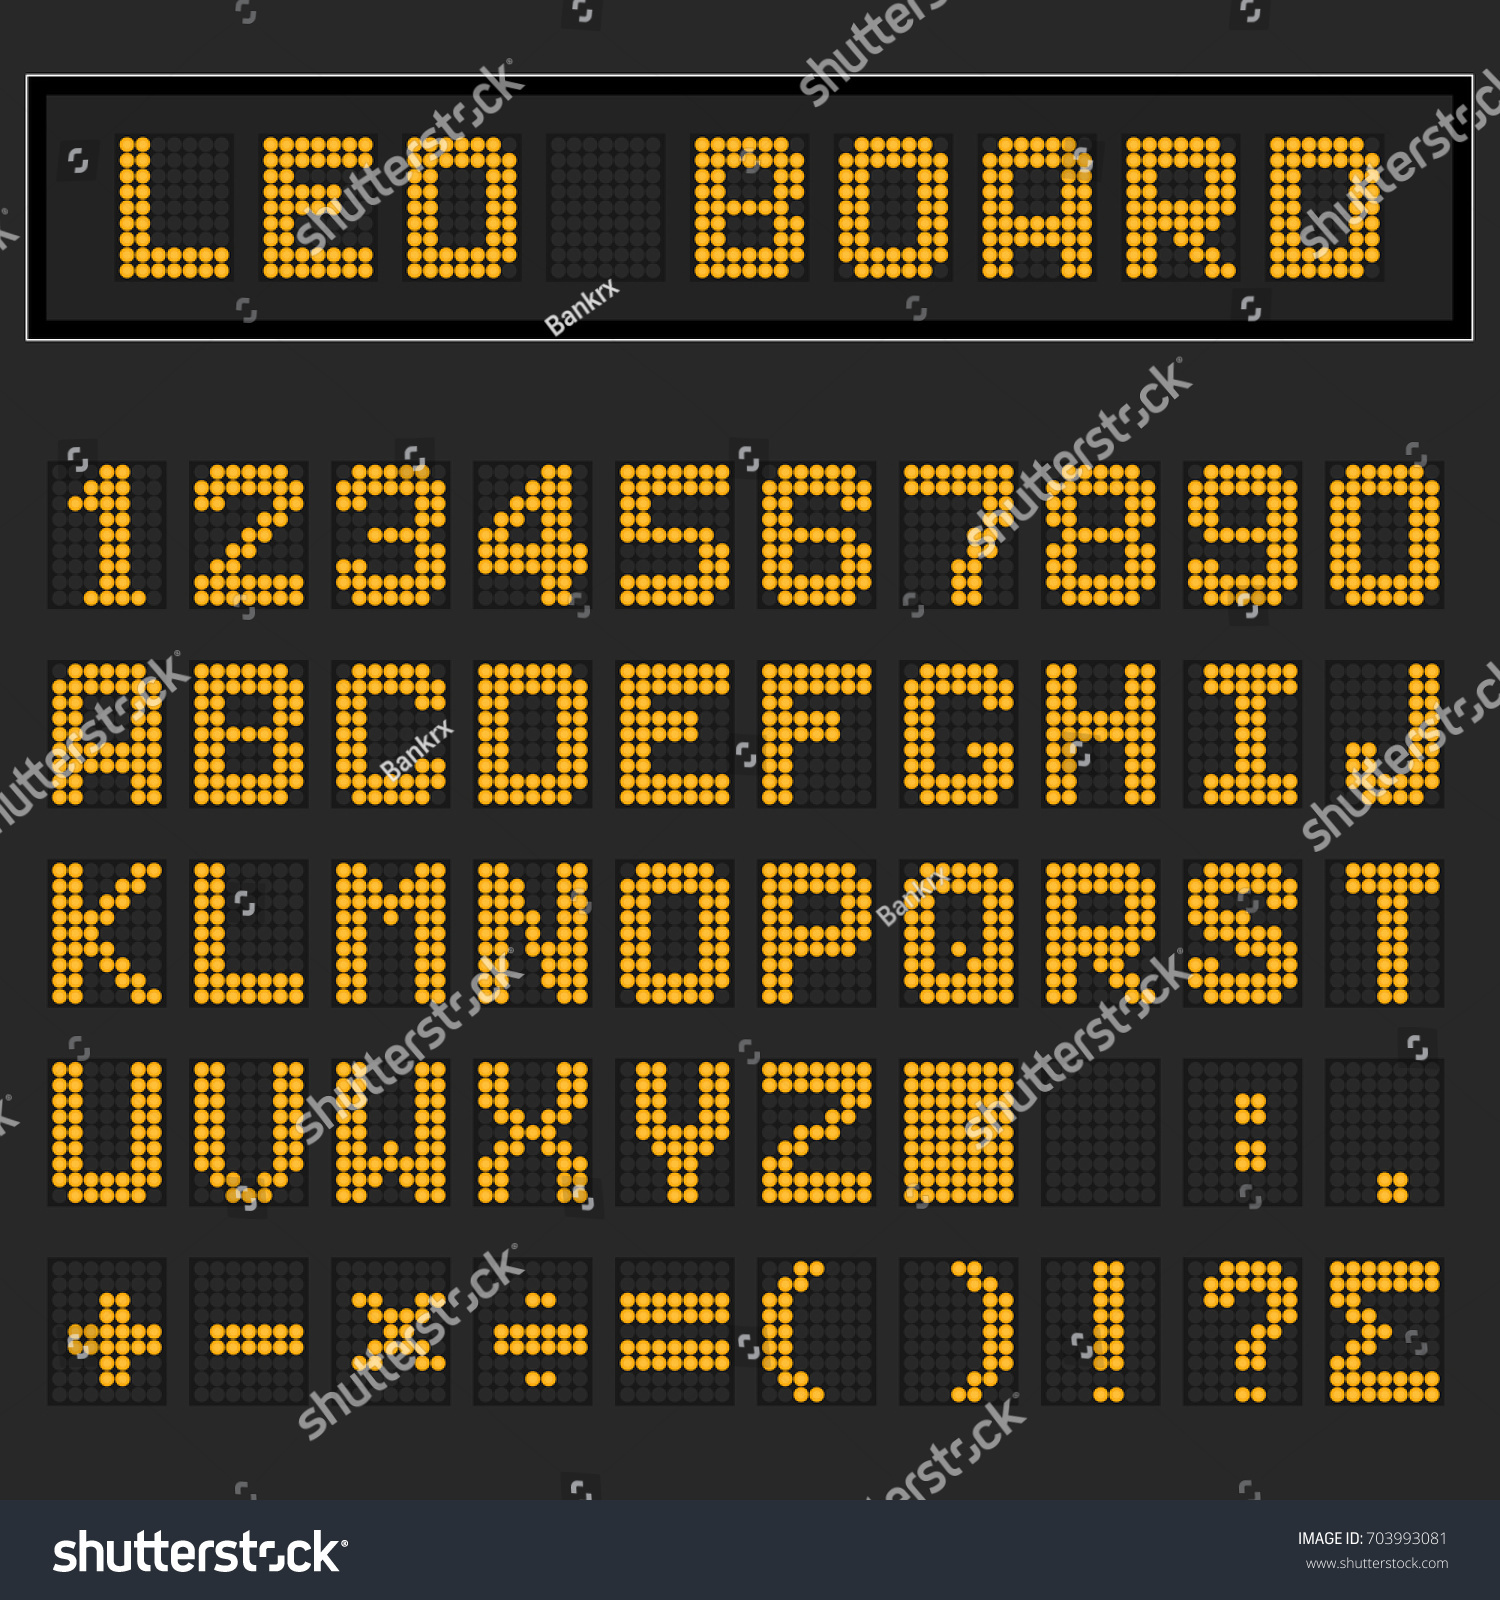 SVG of Orange LED digital english uppercase font, number and mathematics symbol display on black background svg